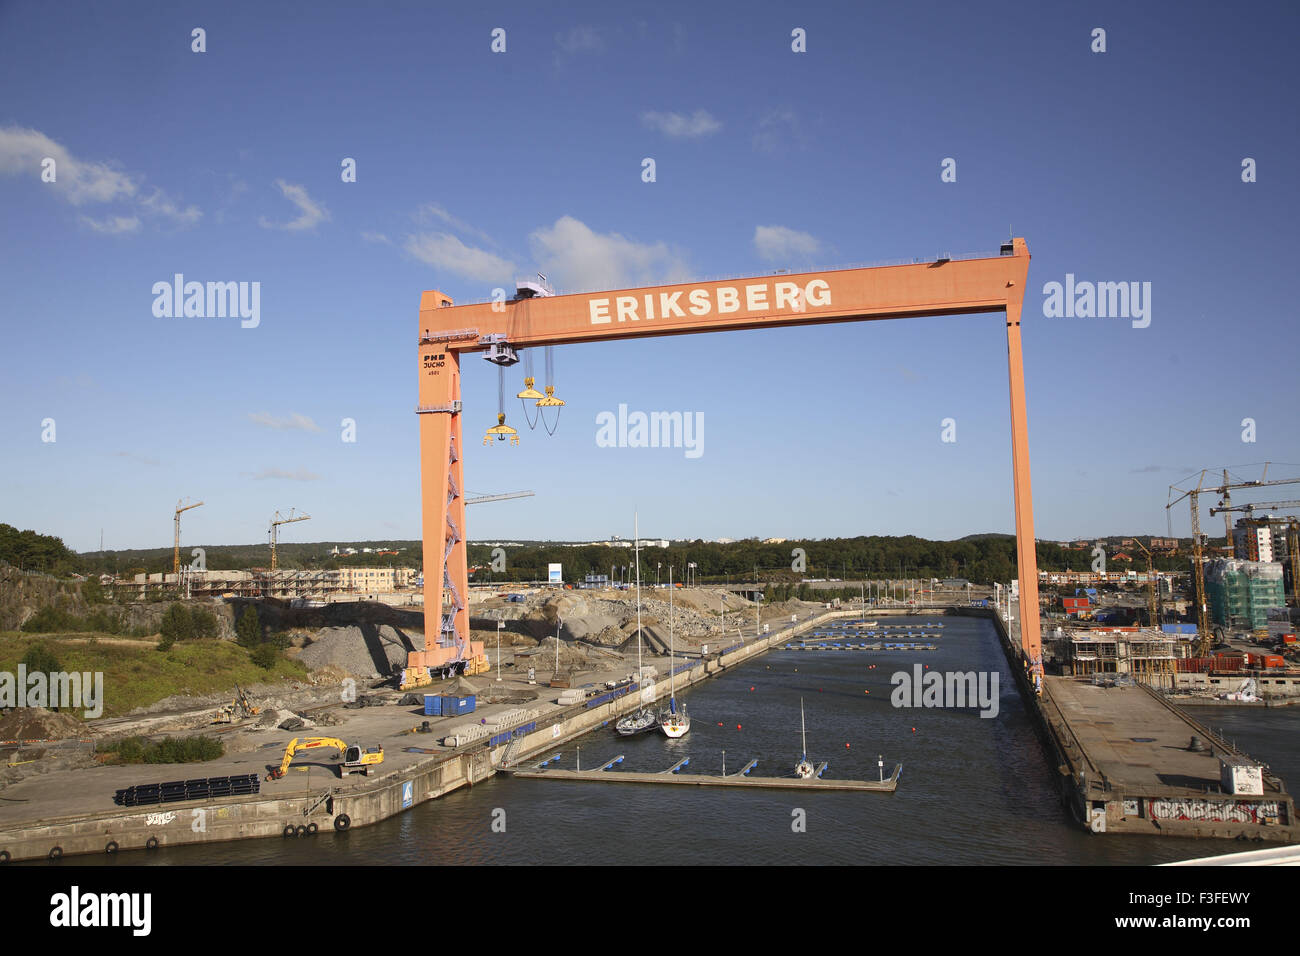 Eriksberg gantry crane for shipbuilding, Gothenburg, Vastra Gotaland County, Sweden, Nordic countries, Europe Stock Photo